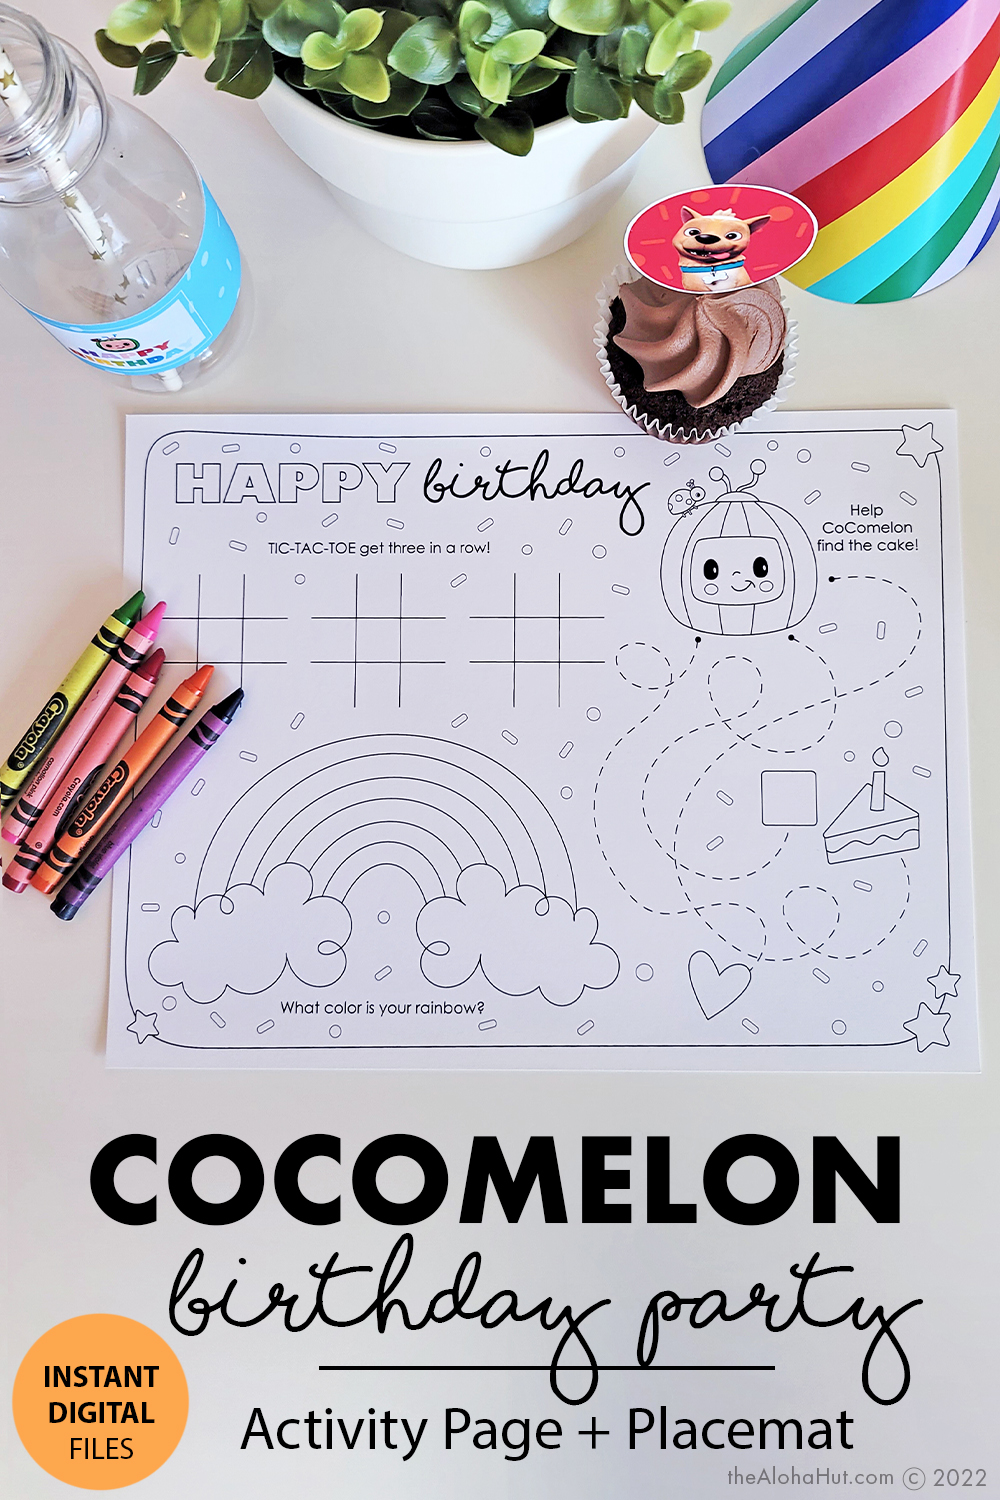 9 Cocomelon Birthday Party Ideas